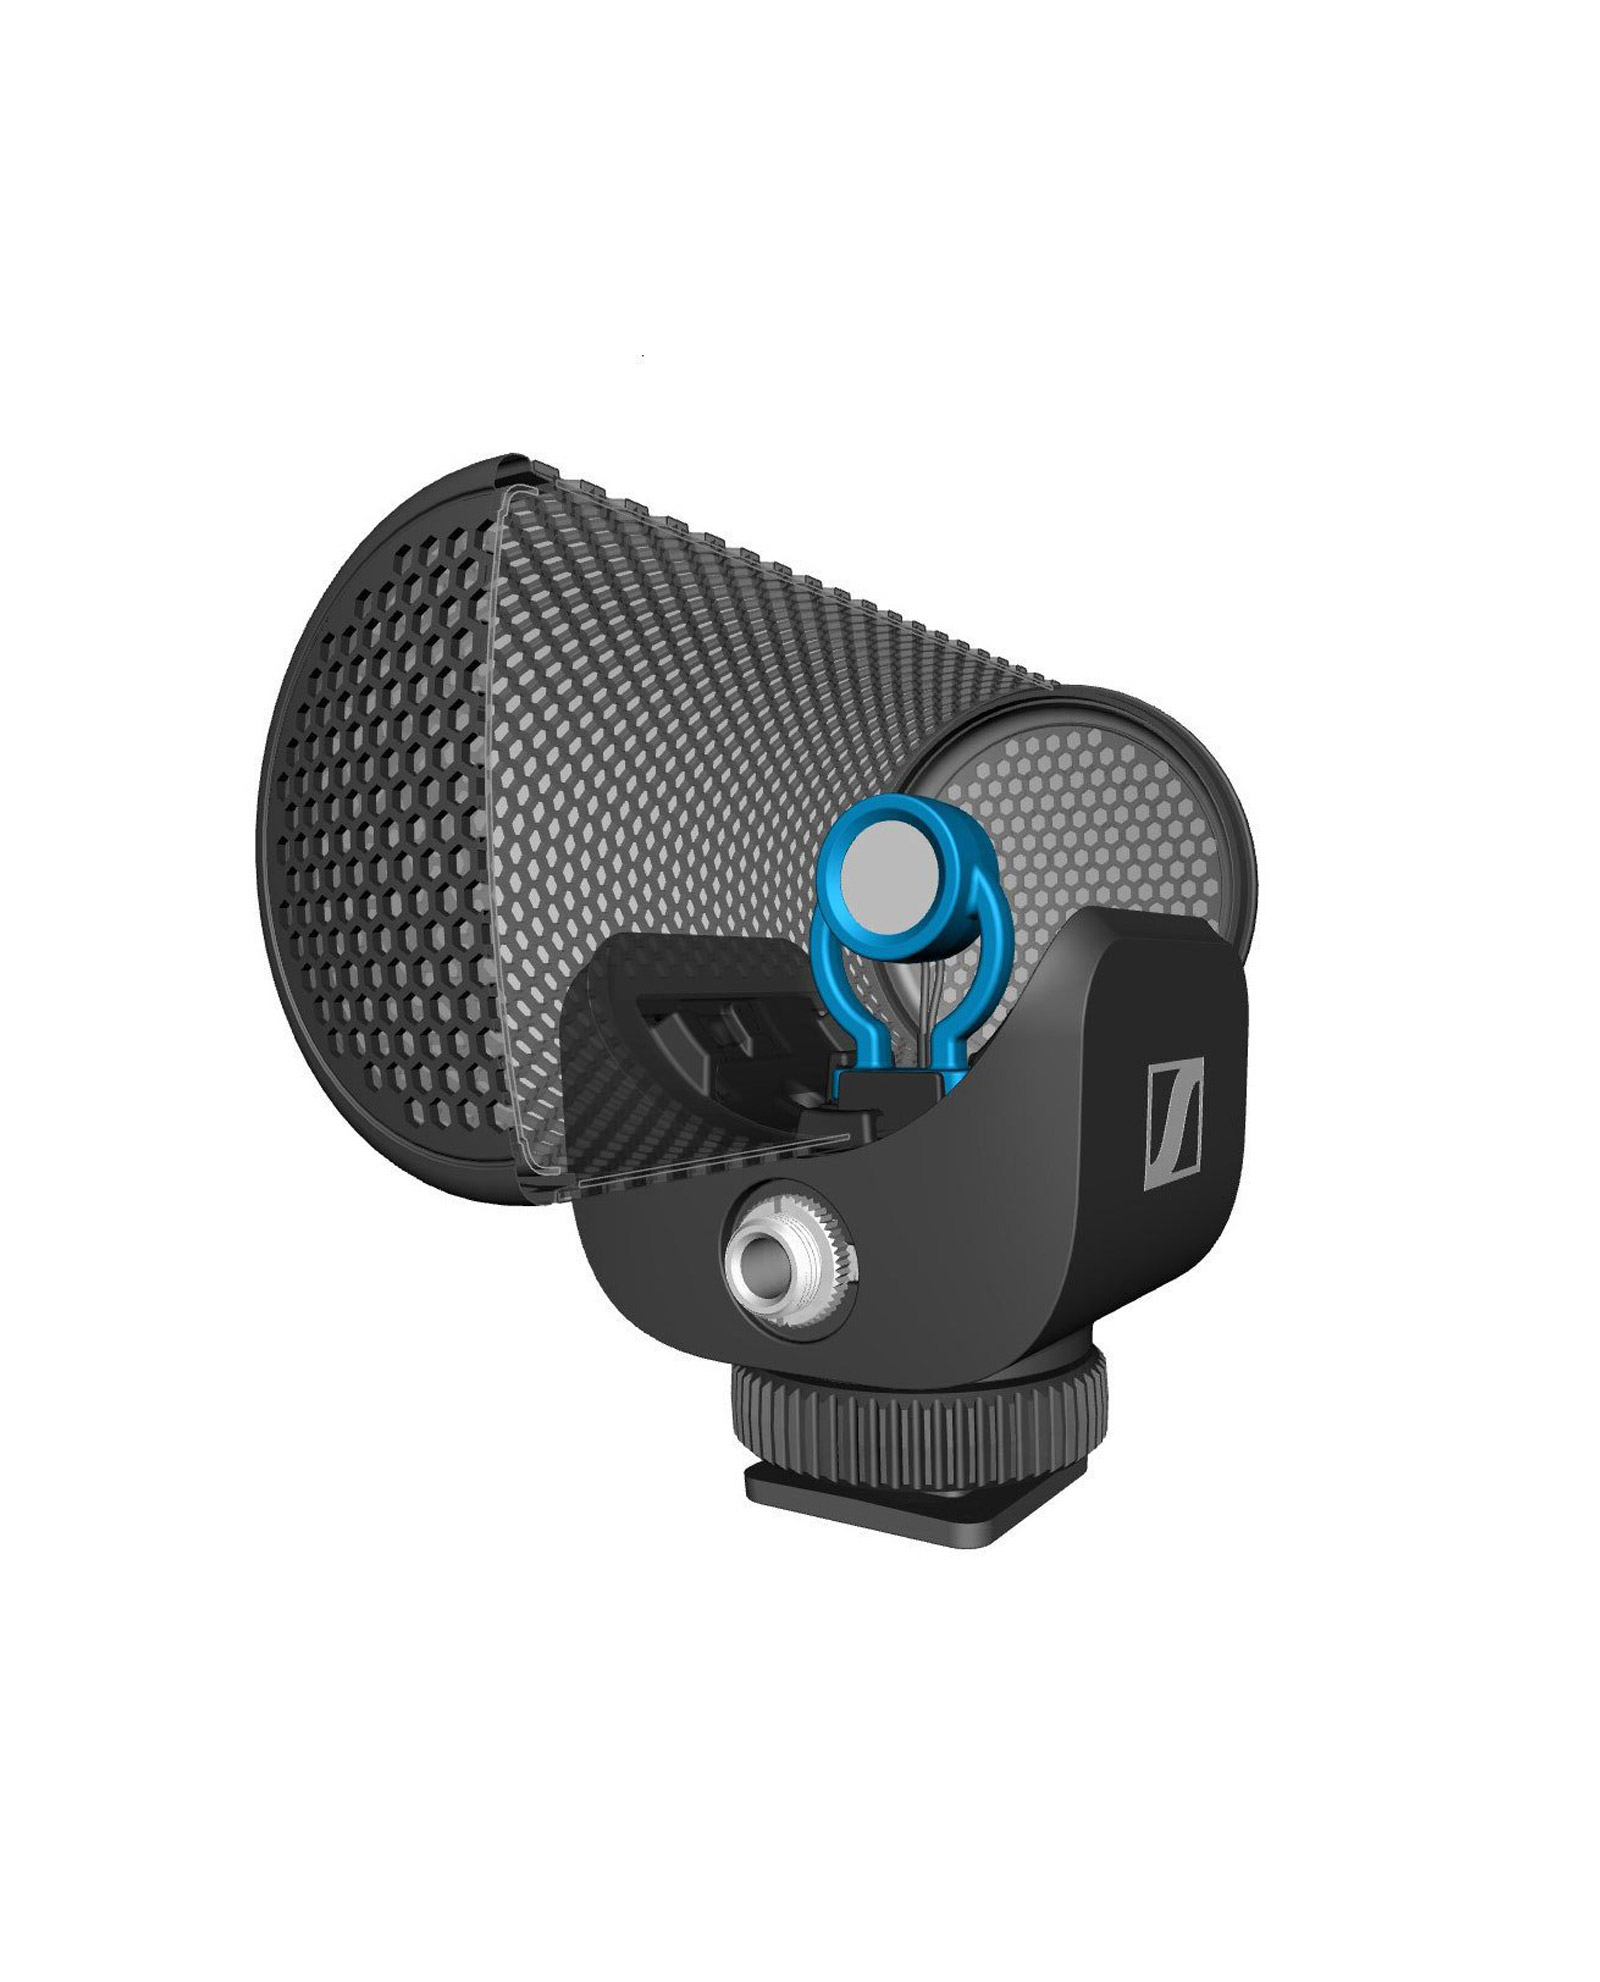 Sennheiser Mke 200 Compact Super Cardioid On Camera Microphone 4